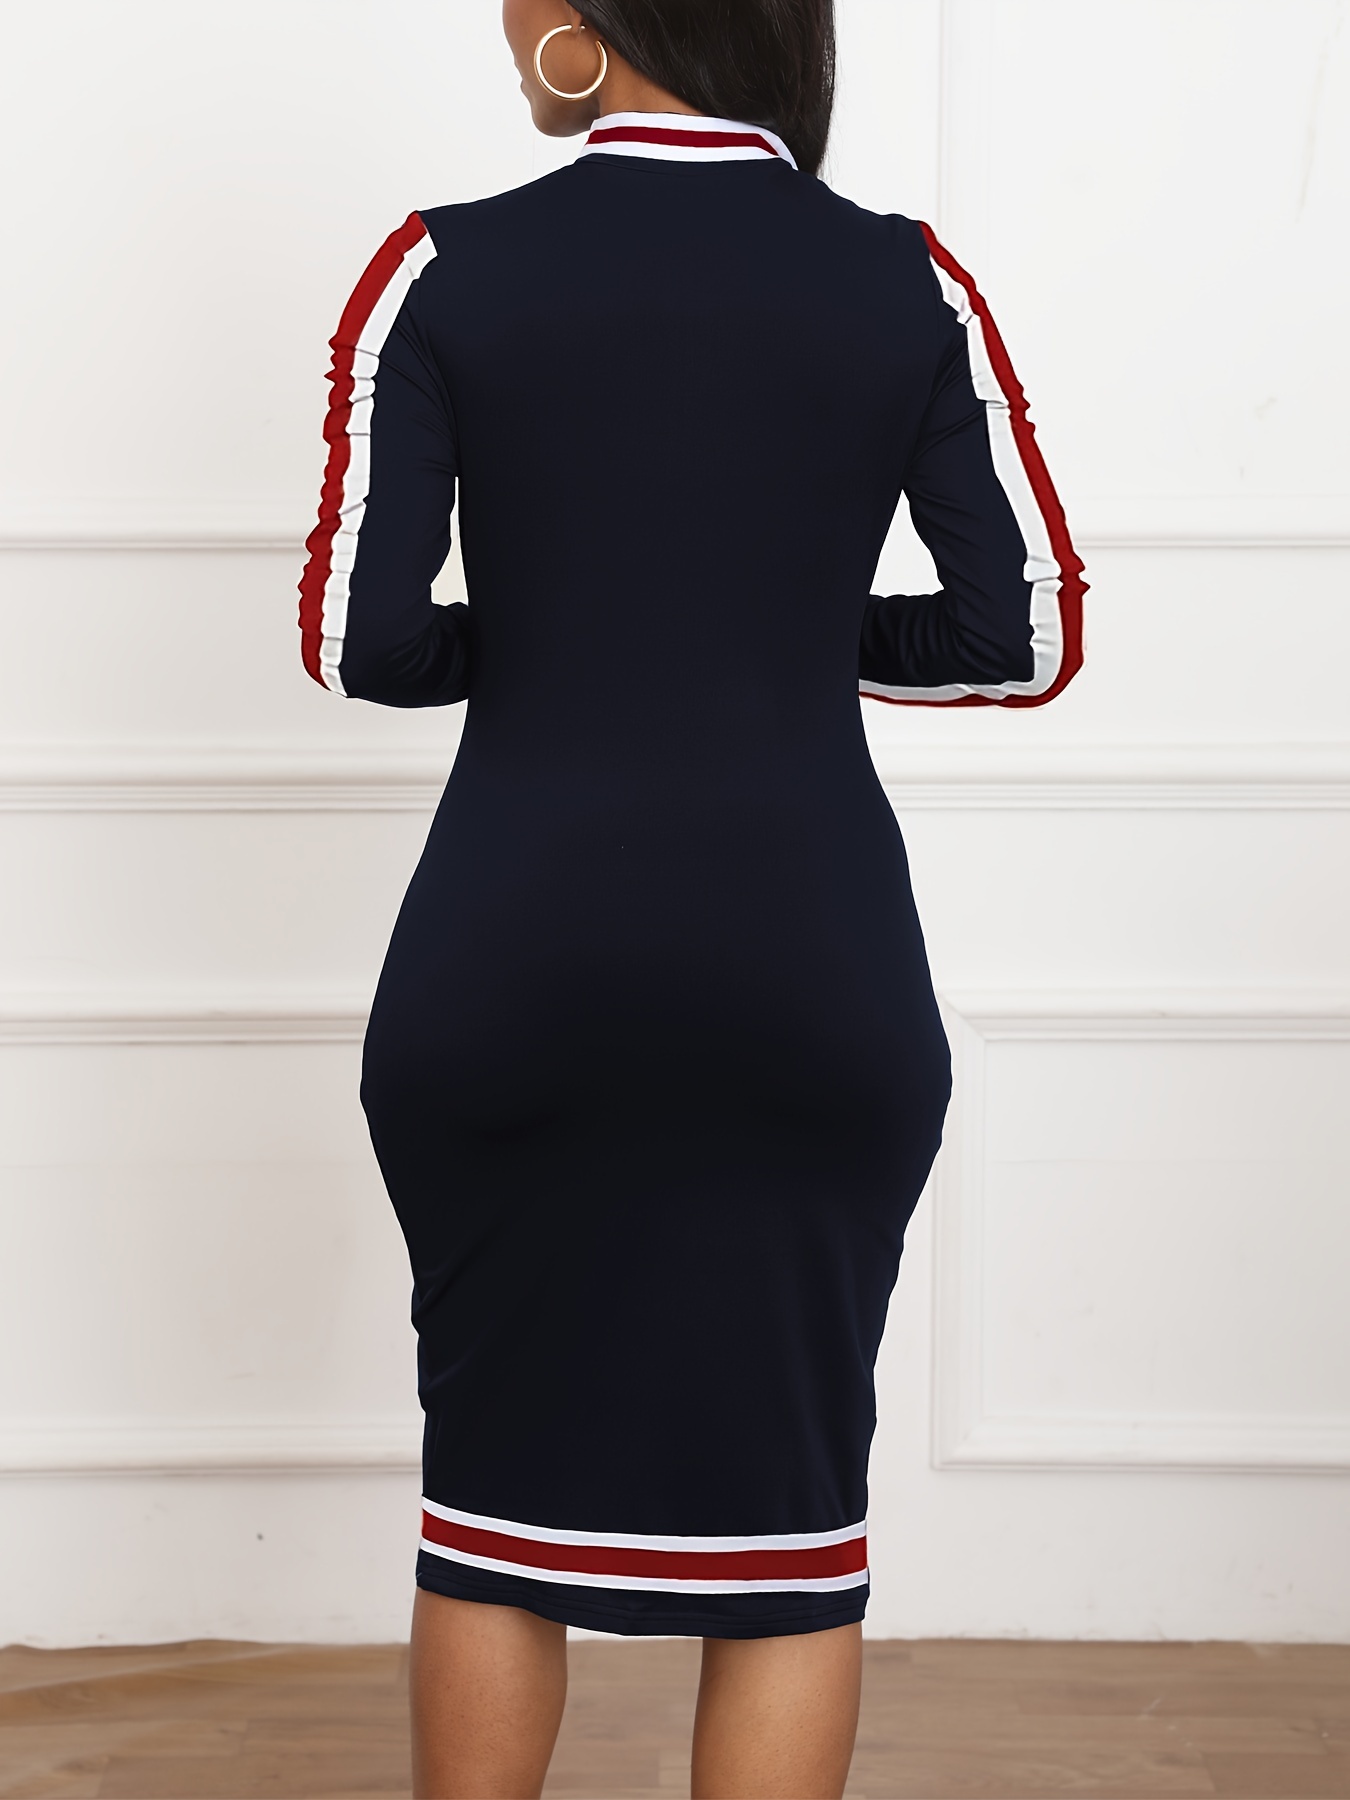 zip up striped print dress, casual long sleeve bodycon midi dress, women's clothing navy blue 1